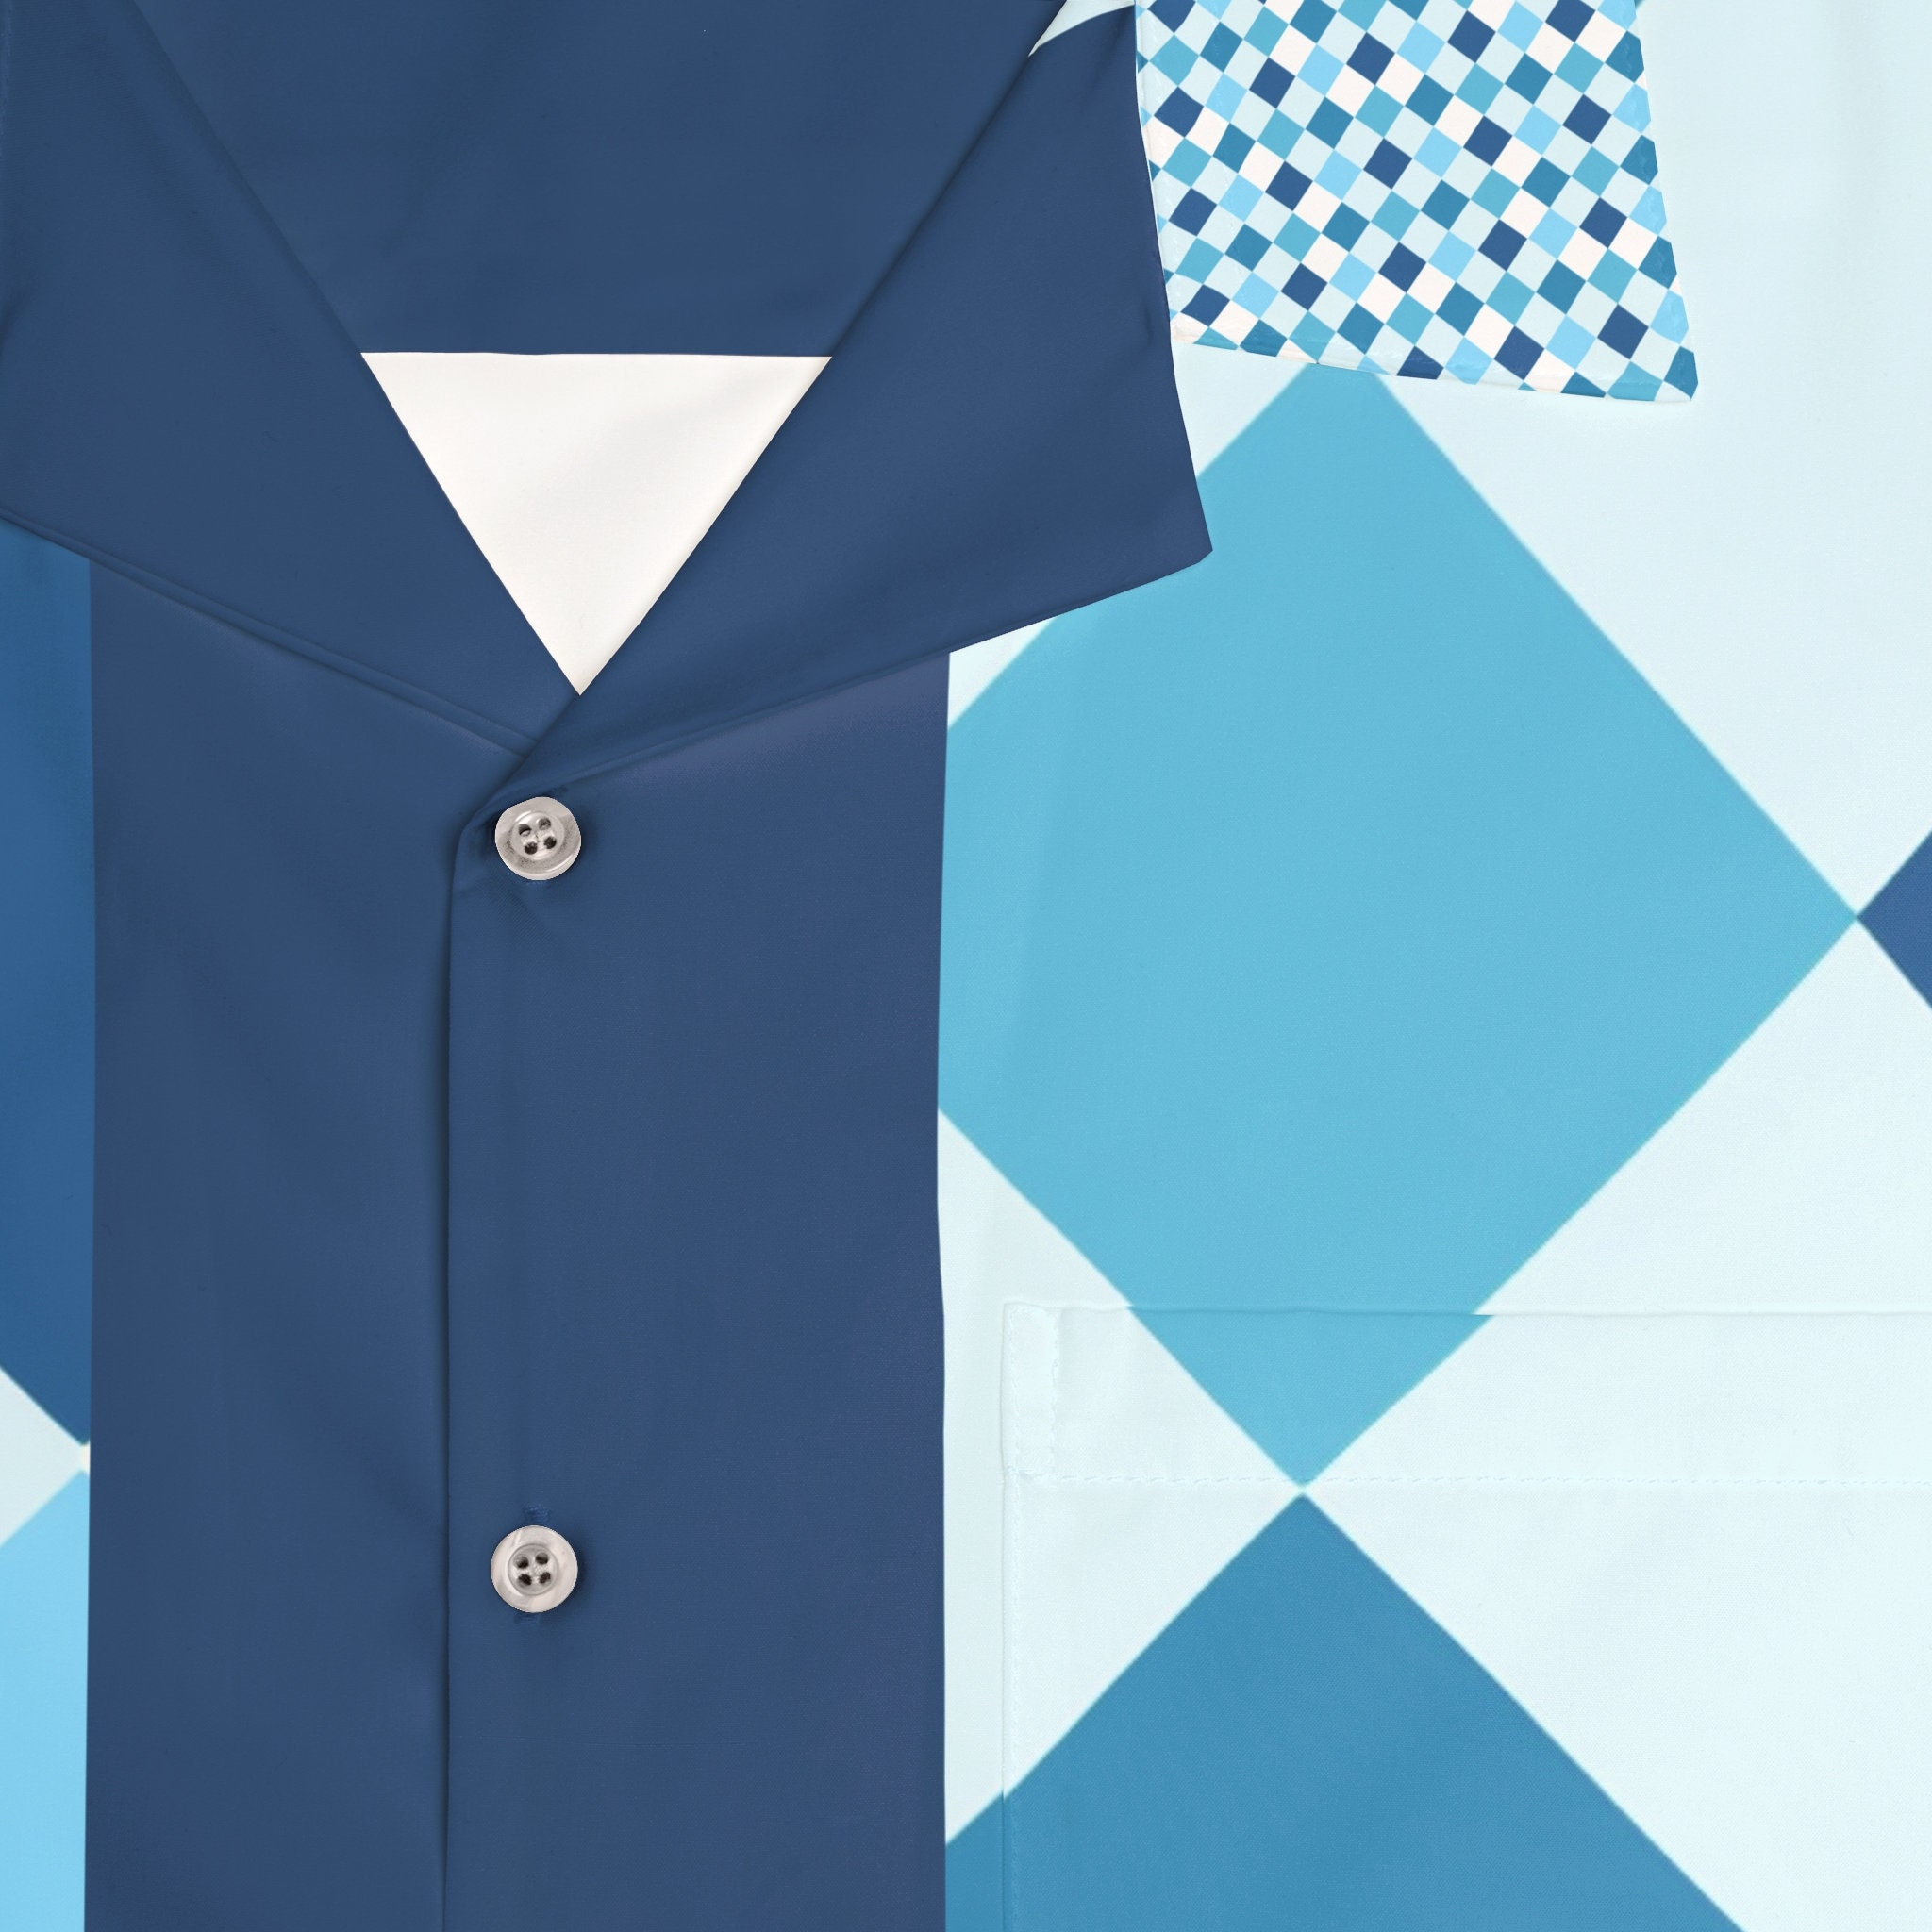 Blue Checkerboard Vintage-inspired Hawaiian Shirt, 1950s style